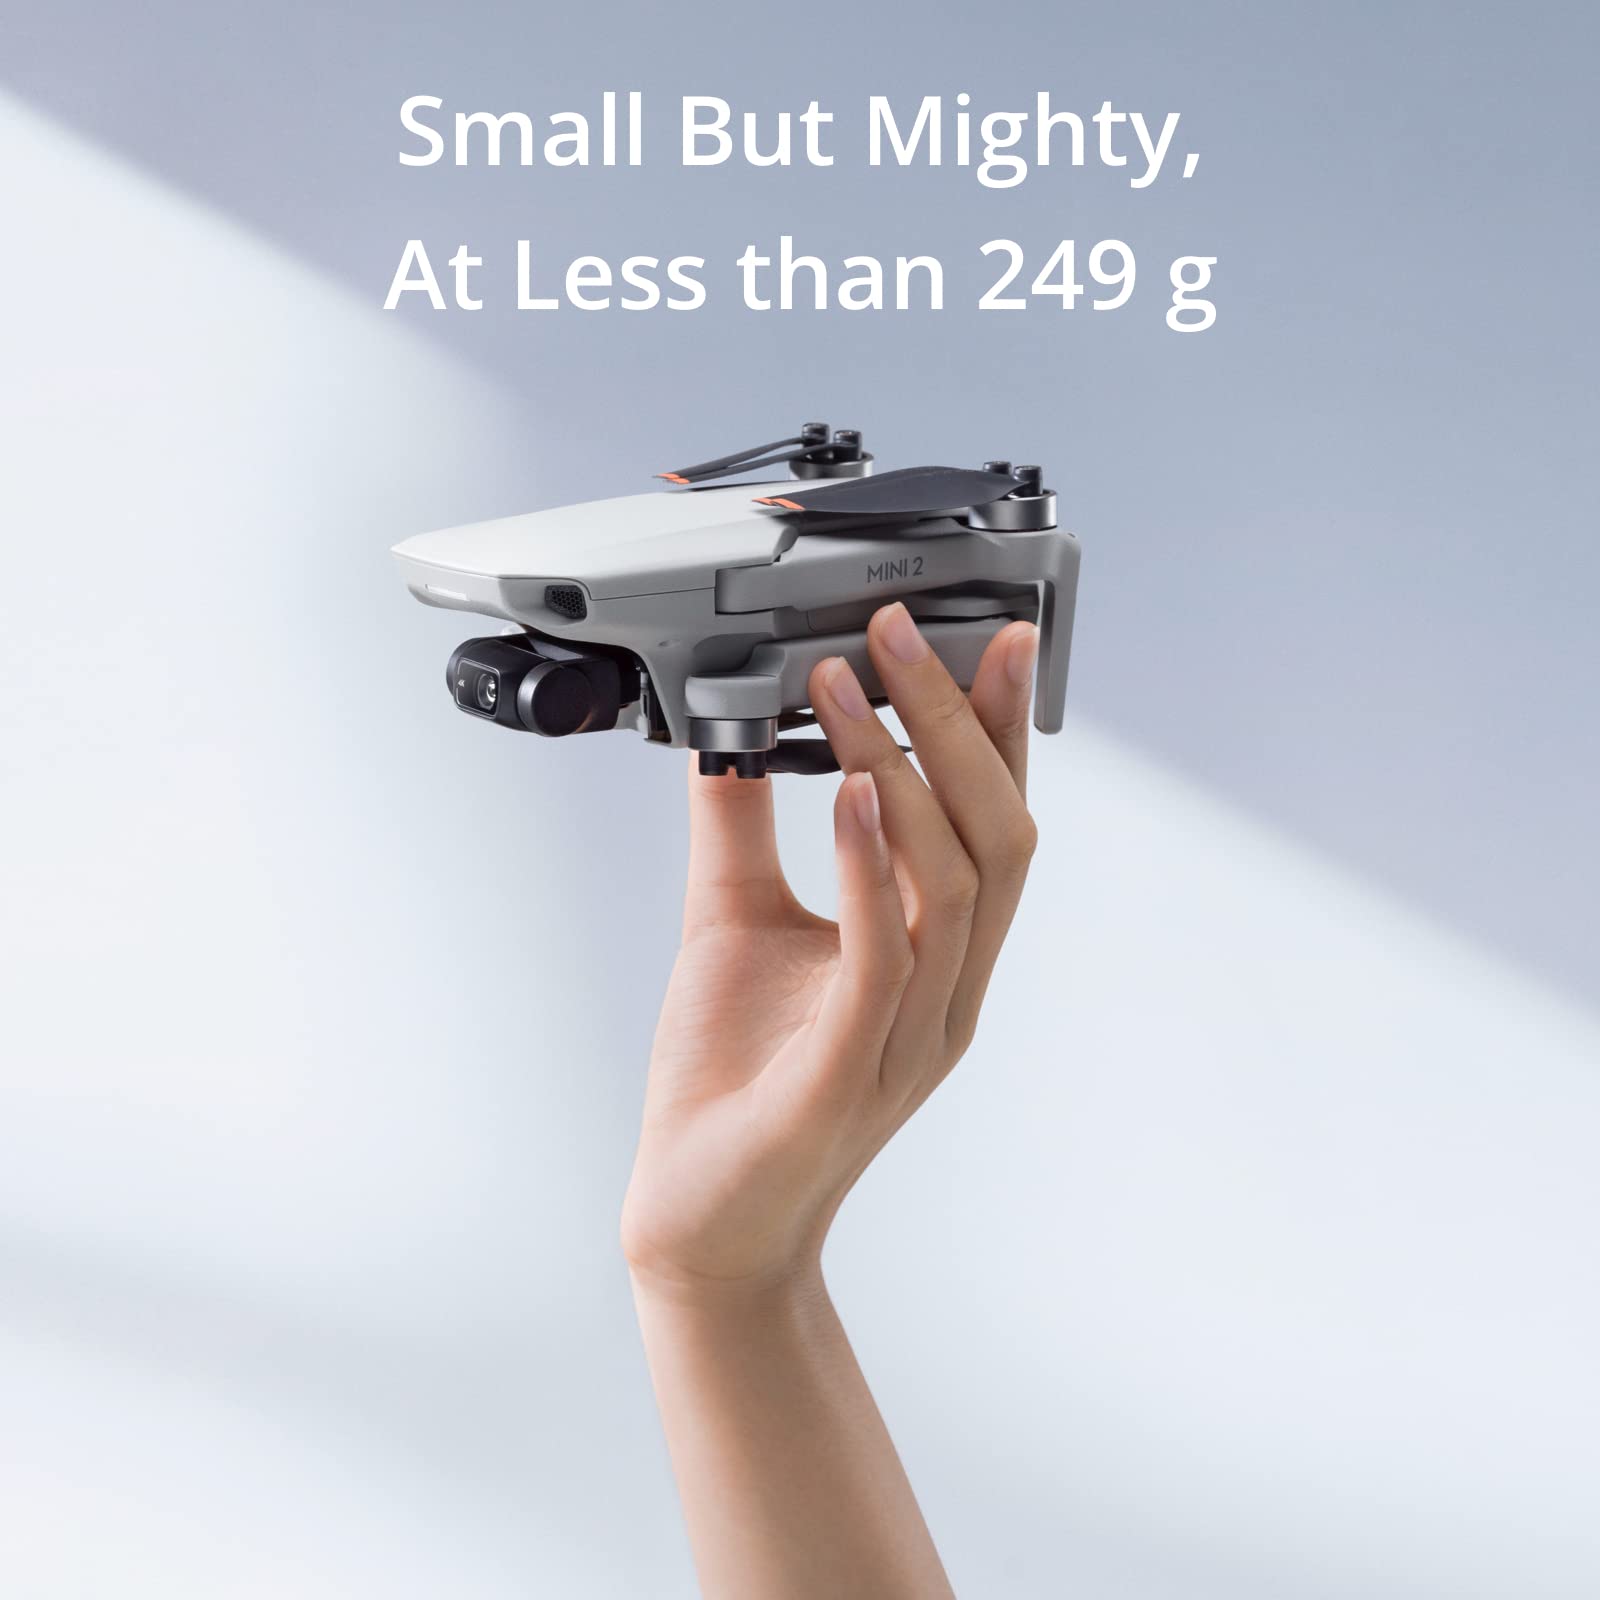 DJI Mini 2 Fly More Combo – Ultralight Foldable Drone, 3-Axis Gimbal with 4K Camera, 12MP Photos, 31 Mins Flight Time, OcuSync 2.0 10km HD Video Transmission, QuickShots, Gray